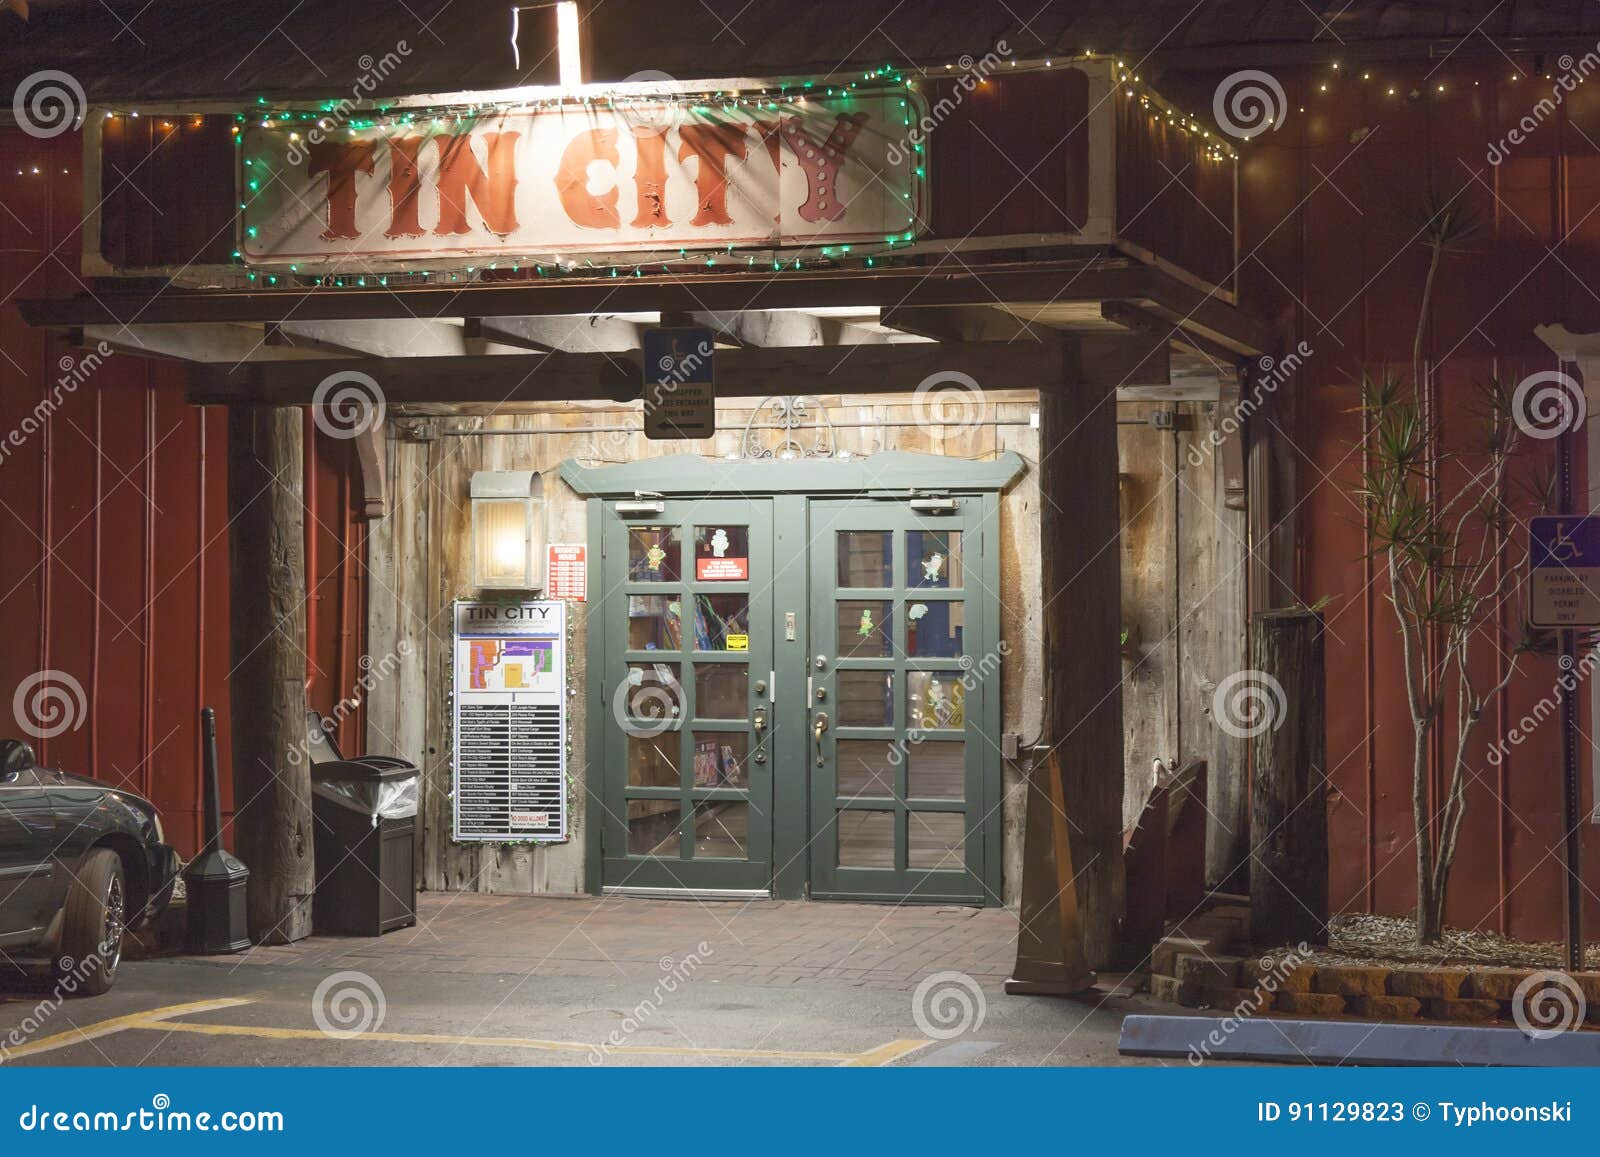 Tin City in Naples, Florida Editorial Stock Photo - Image of states